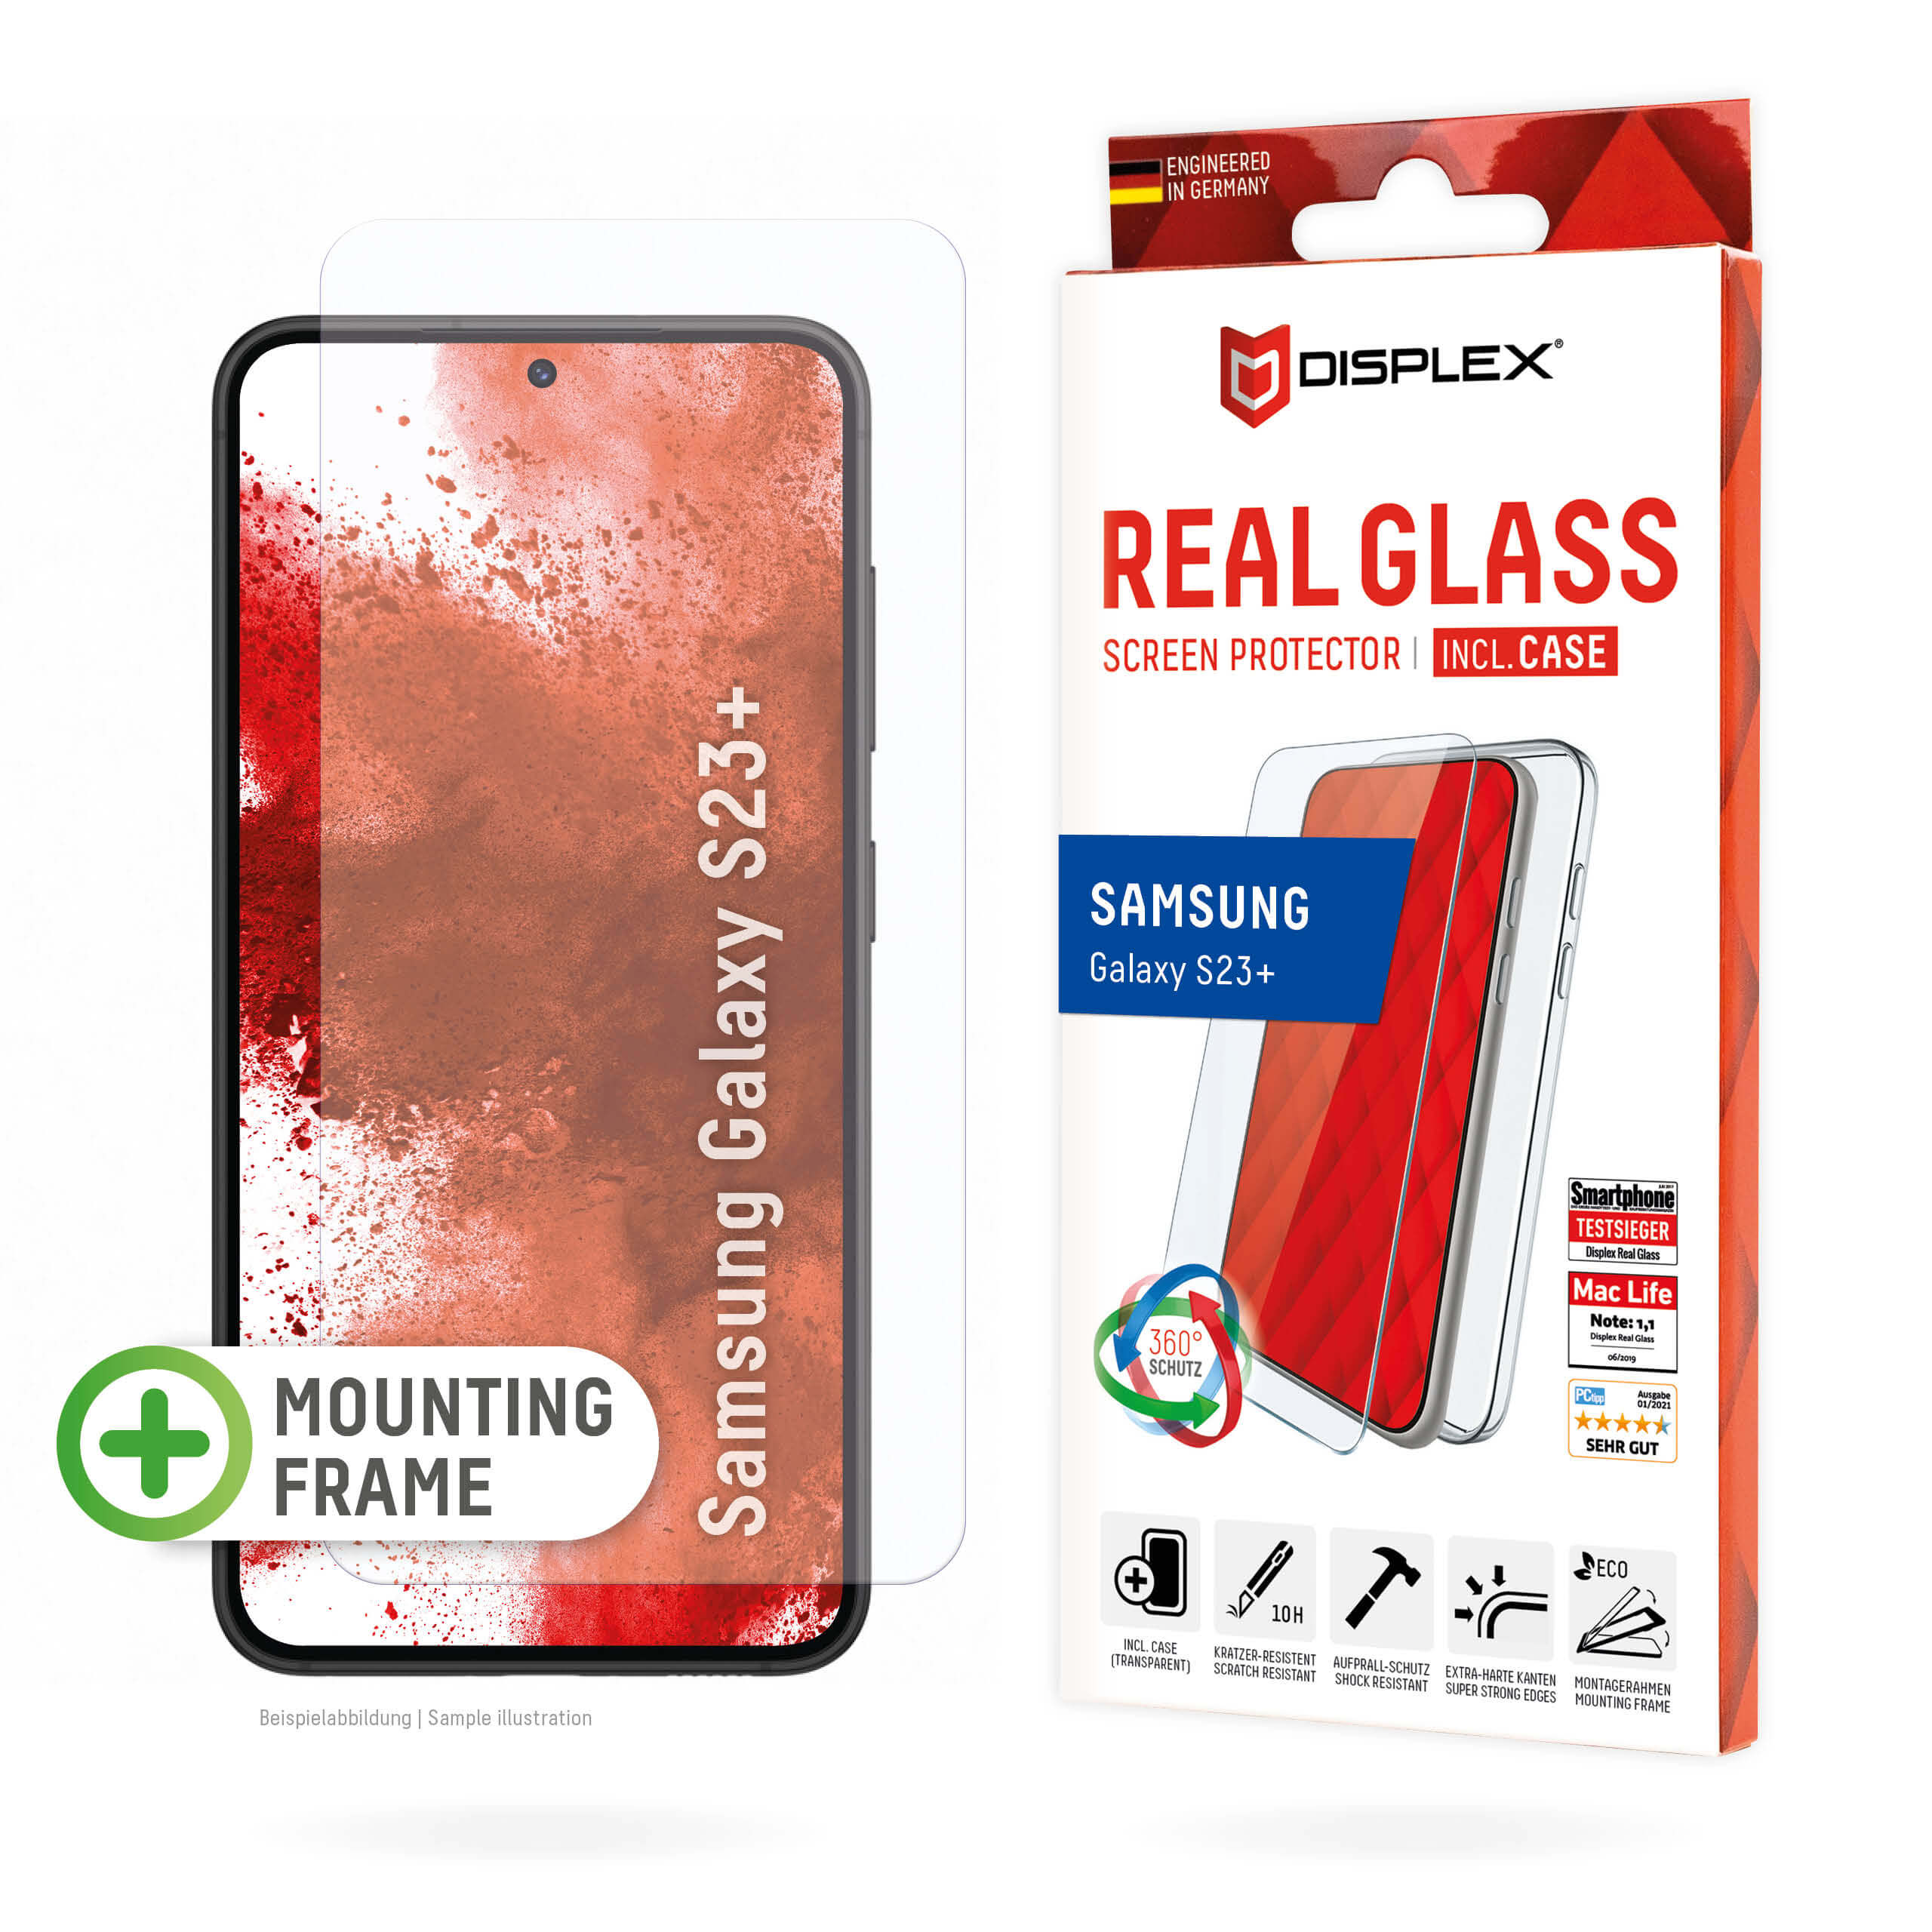 01779-Samsung-Galaxy-S23-Real-Glass-Case-2D-ENNKw1G5VfiIUkP